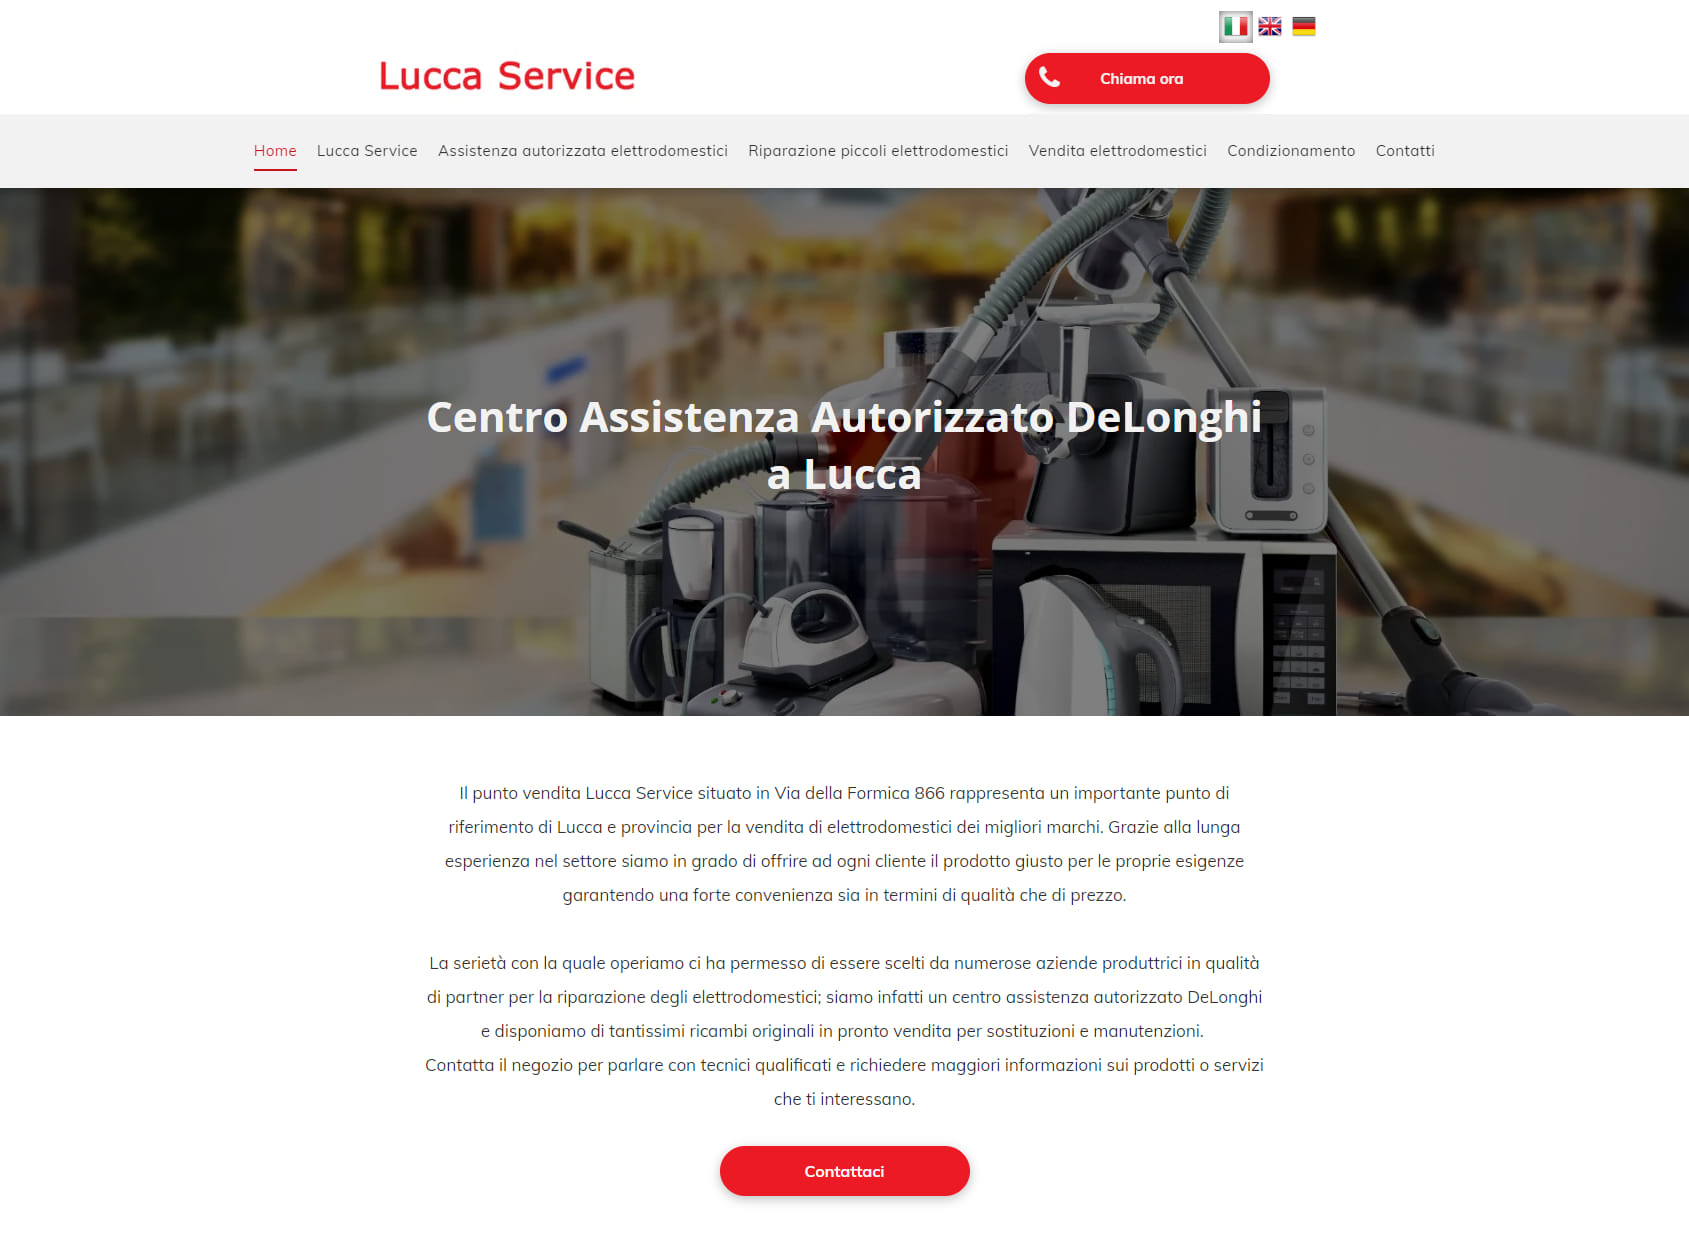 Lucca Service